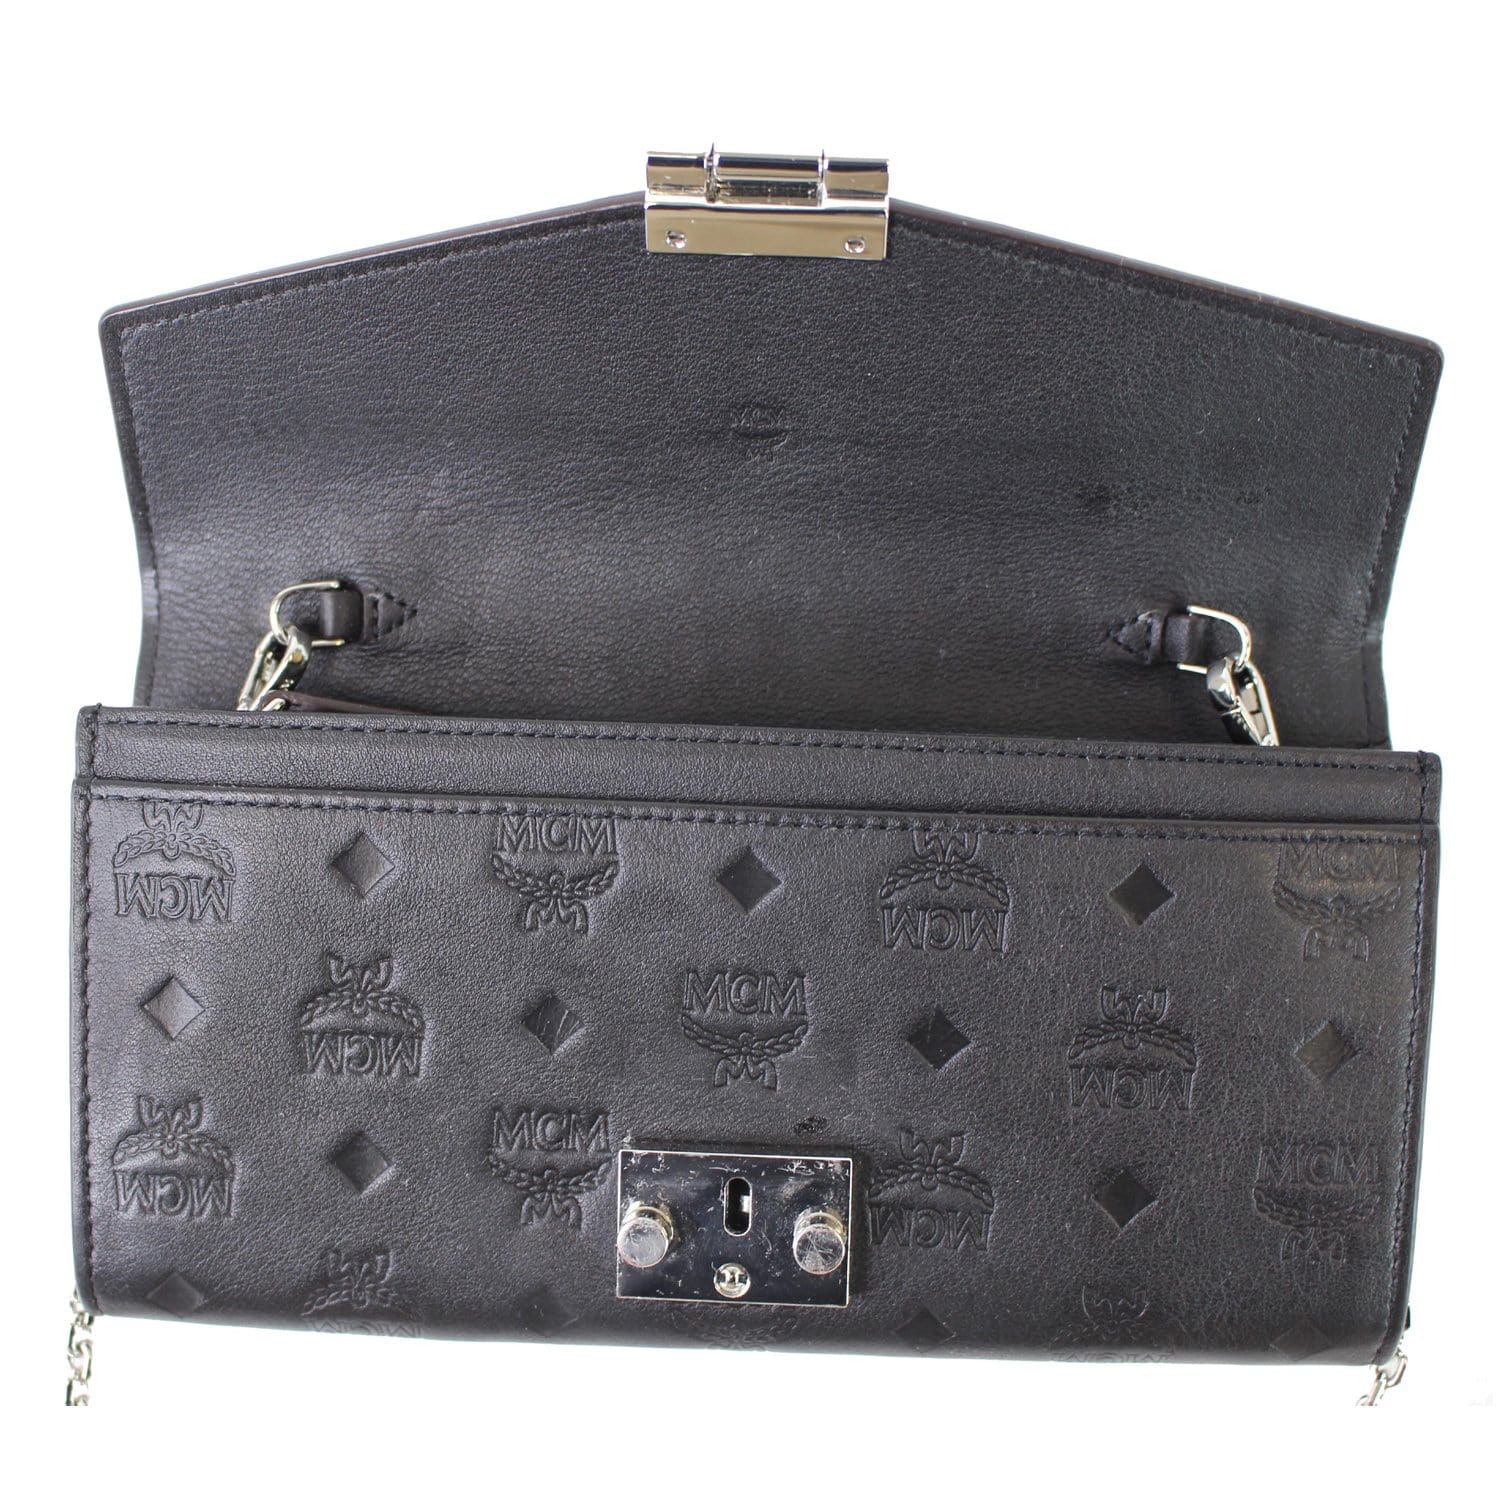 Mcm Black Leather Crossbody Bag